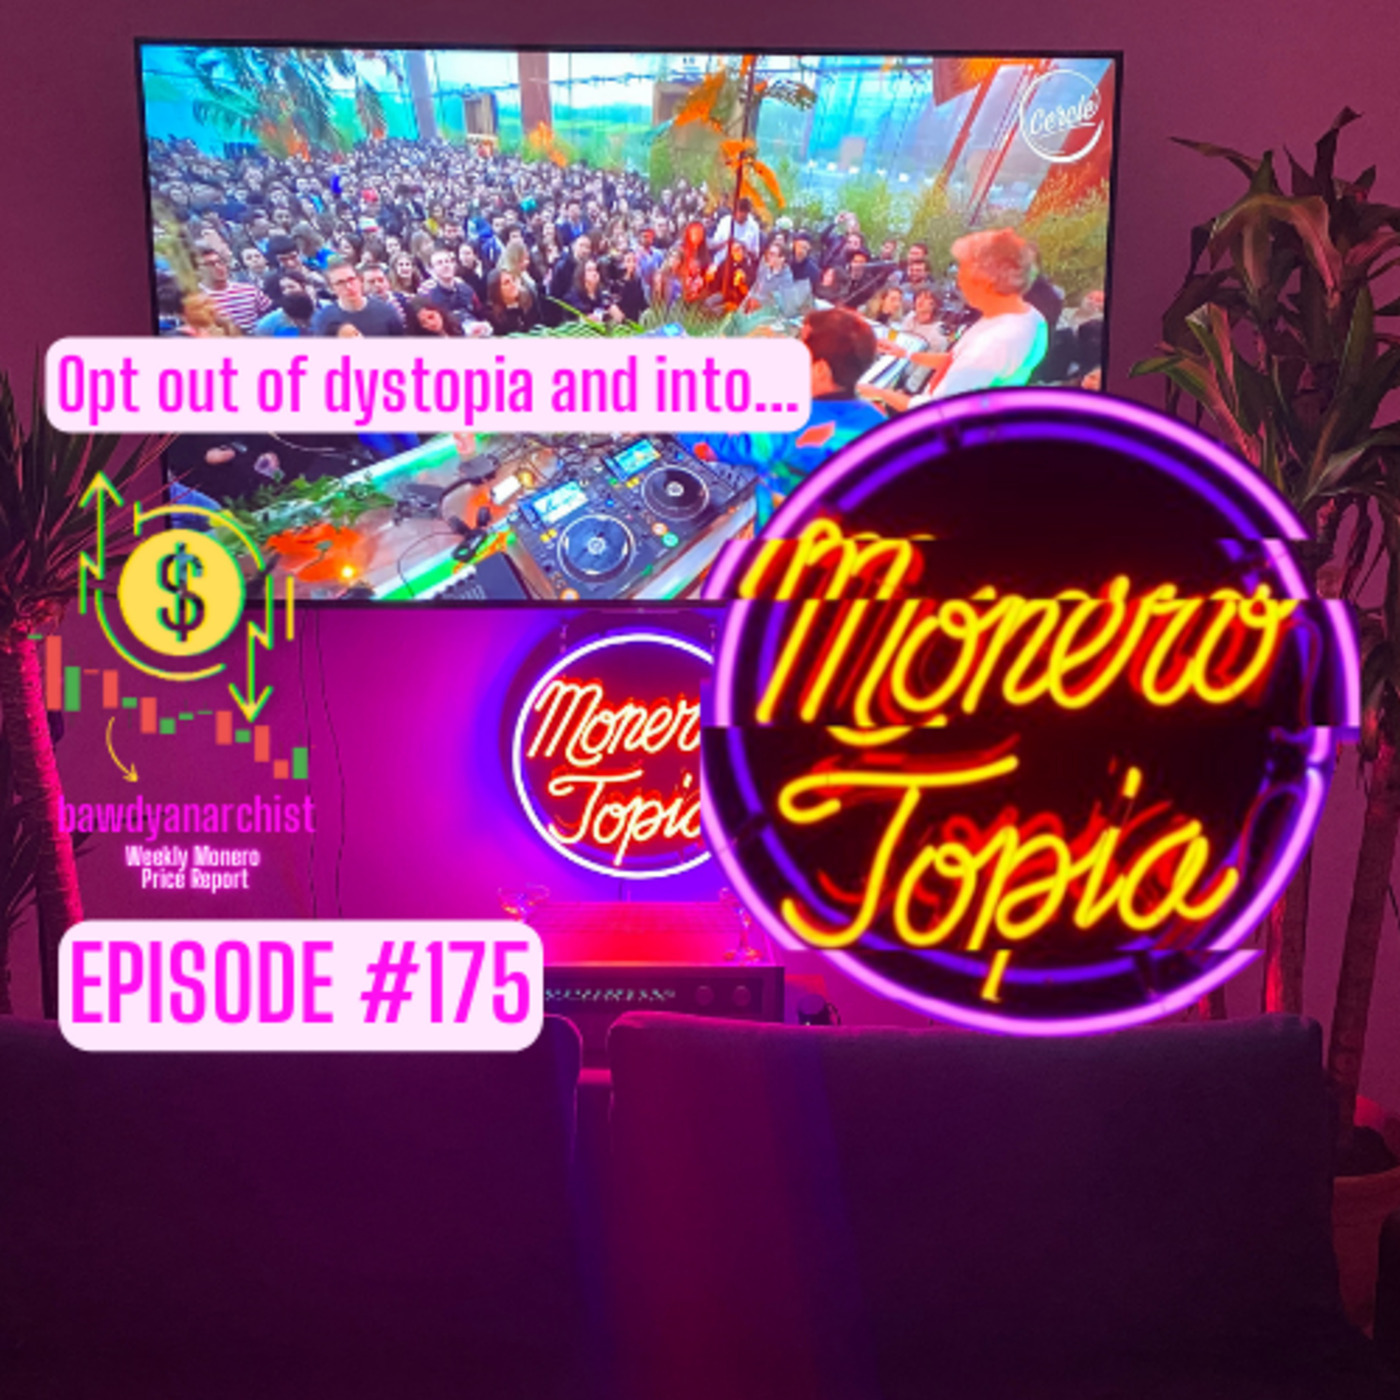 Monero Talk: MoneroTopia Episode 175 – Monero Talk